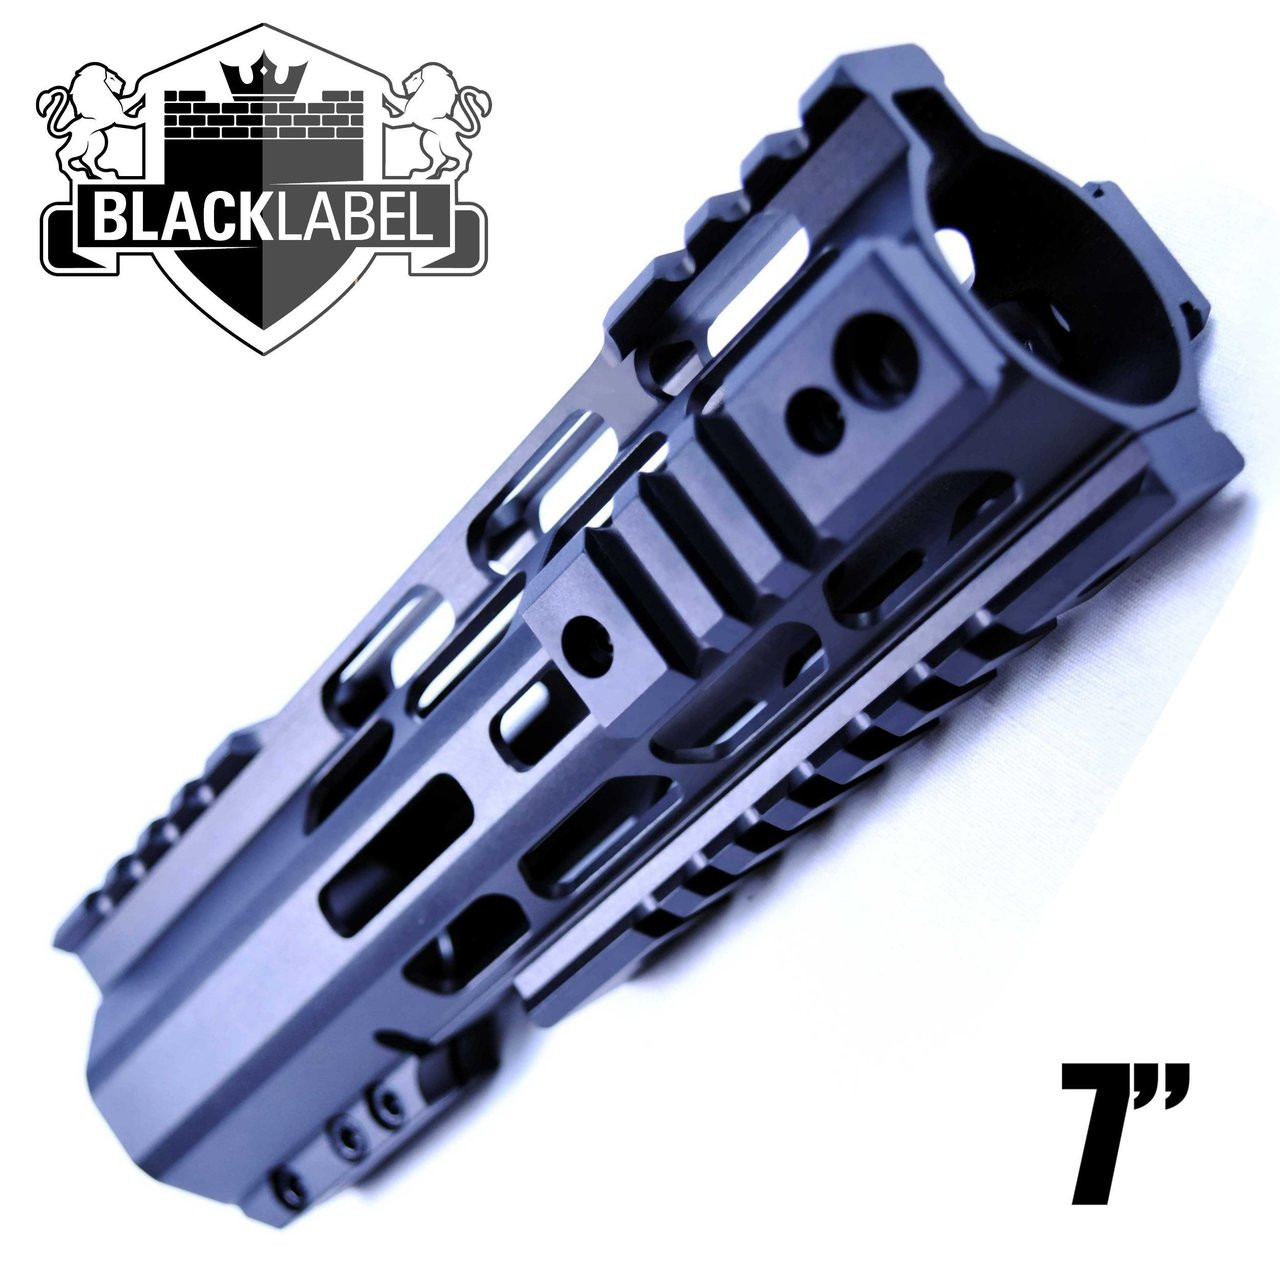 BLACK LABEL Tactical Series G2 | MLOK Slim, 7" Free Float Hand-guard